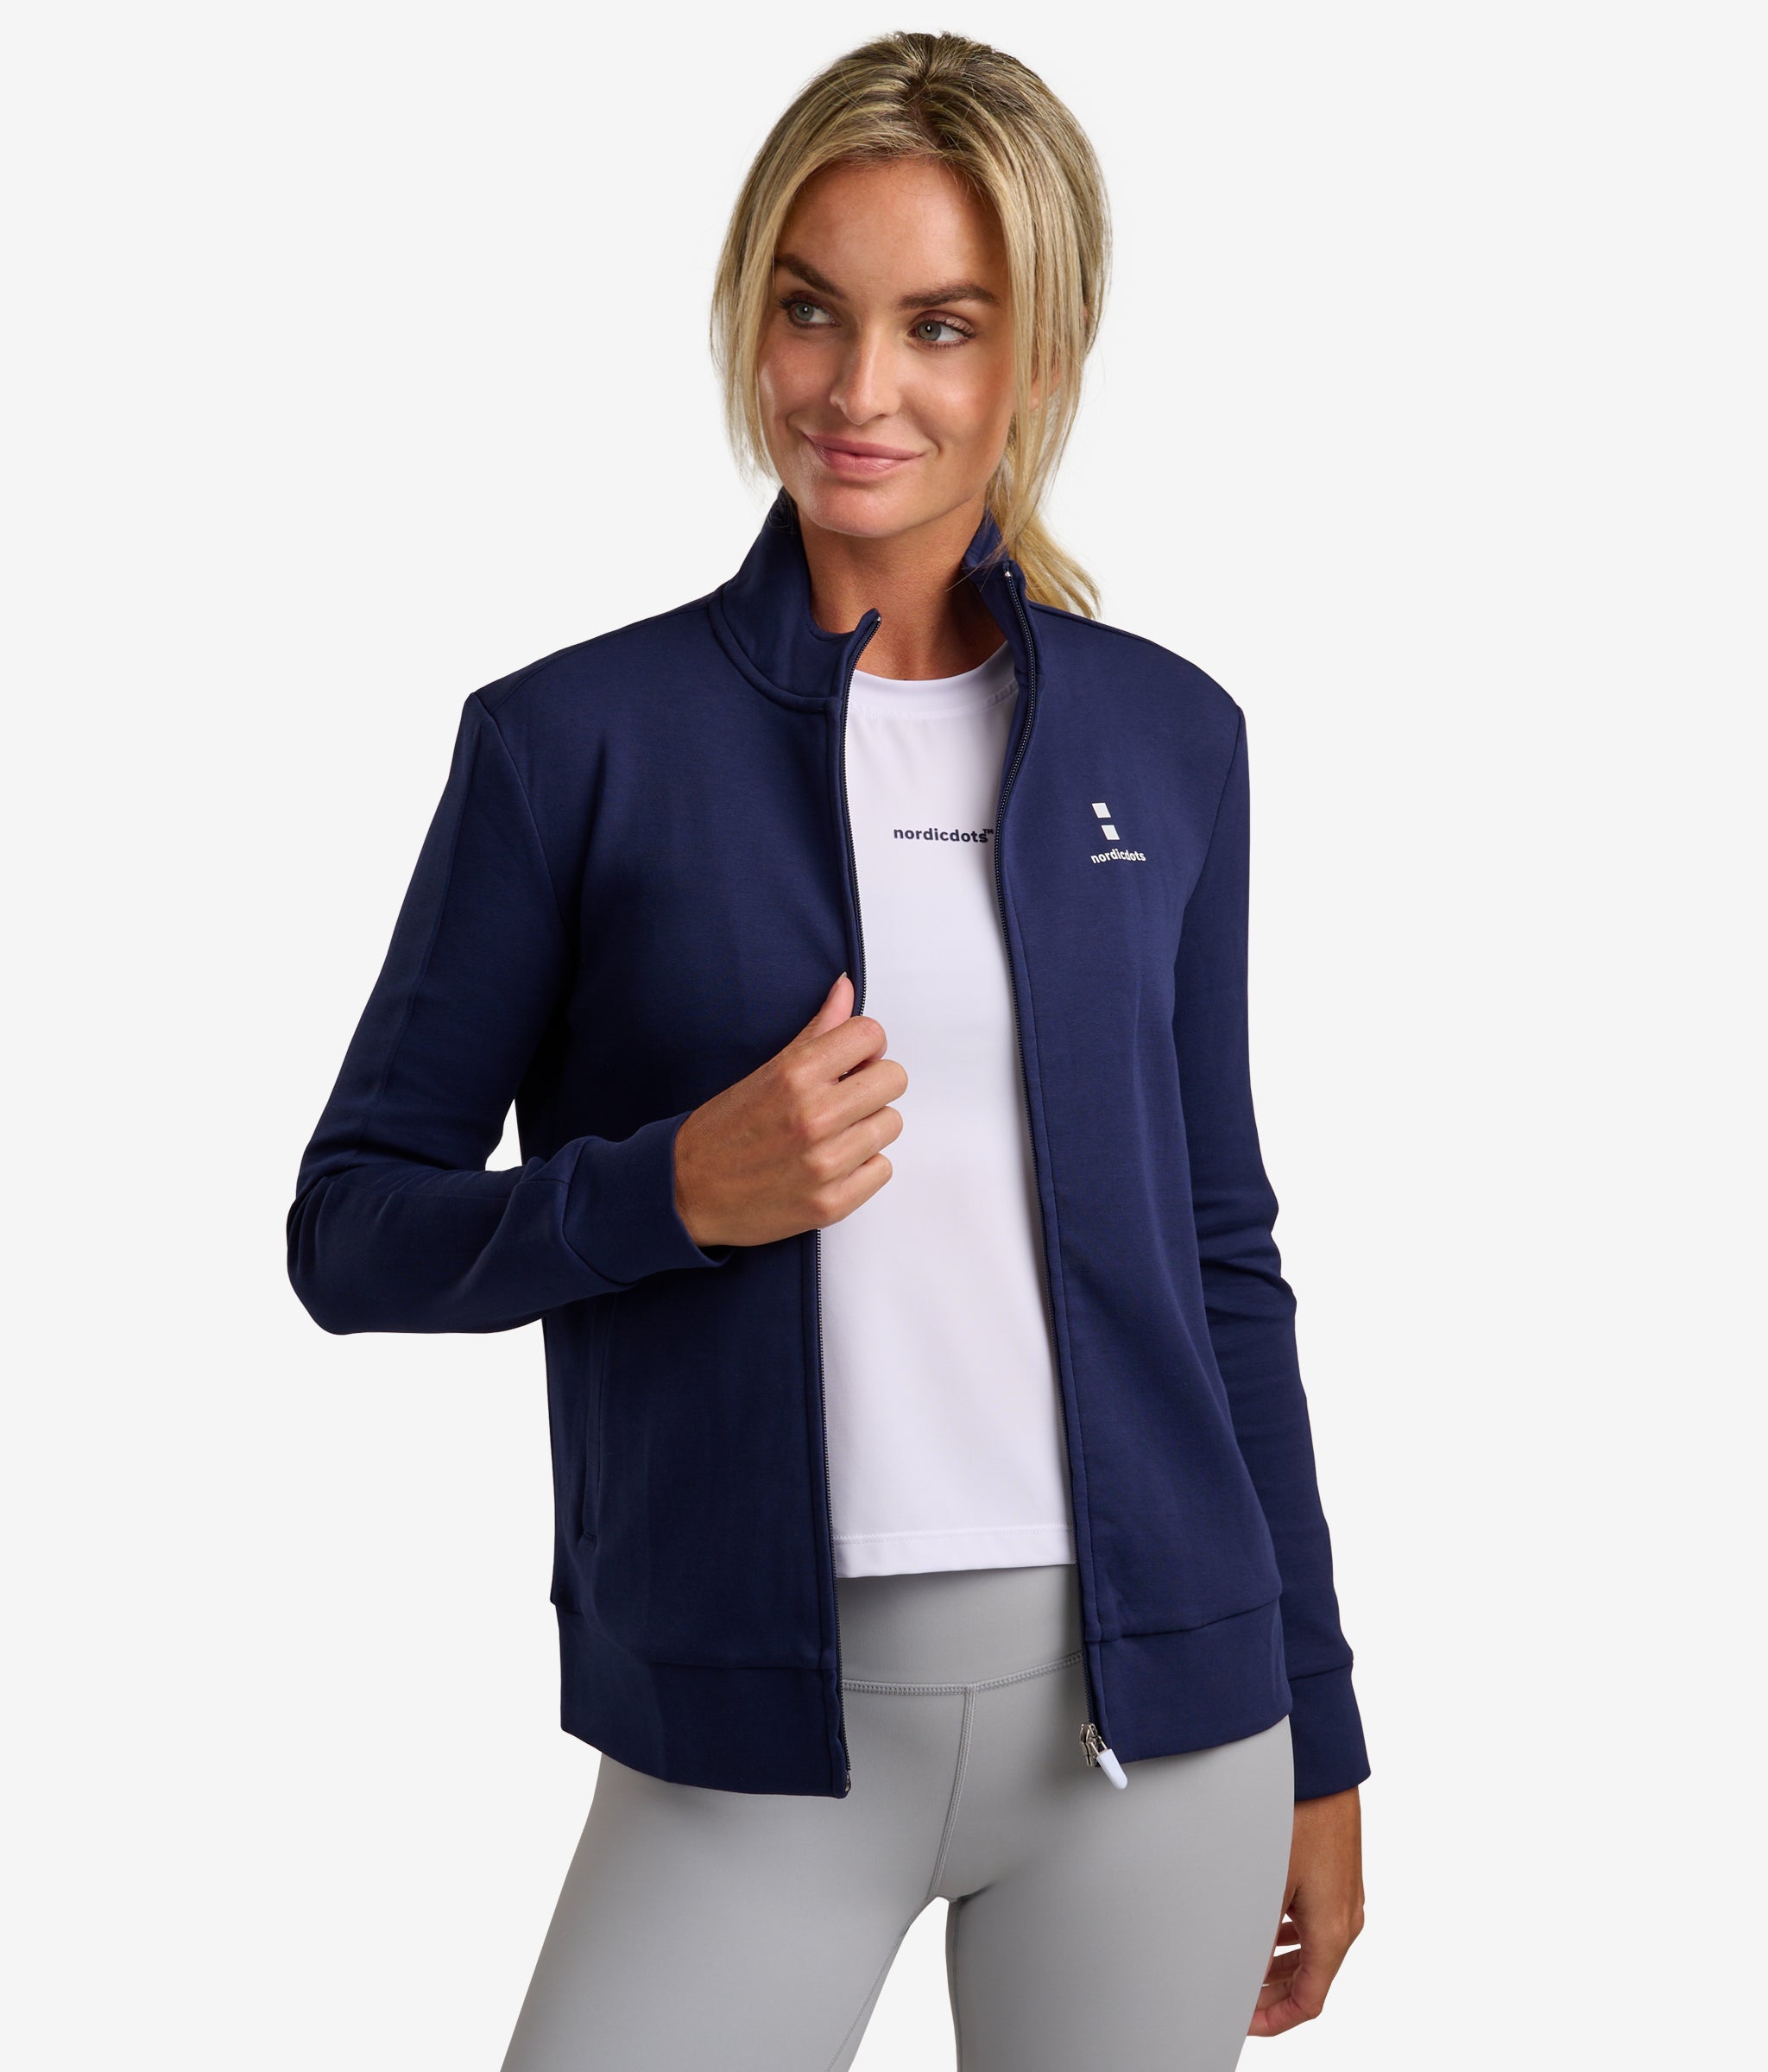 nordicdots tennis jacket navy blue